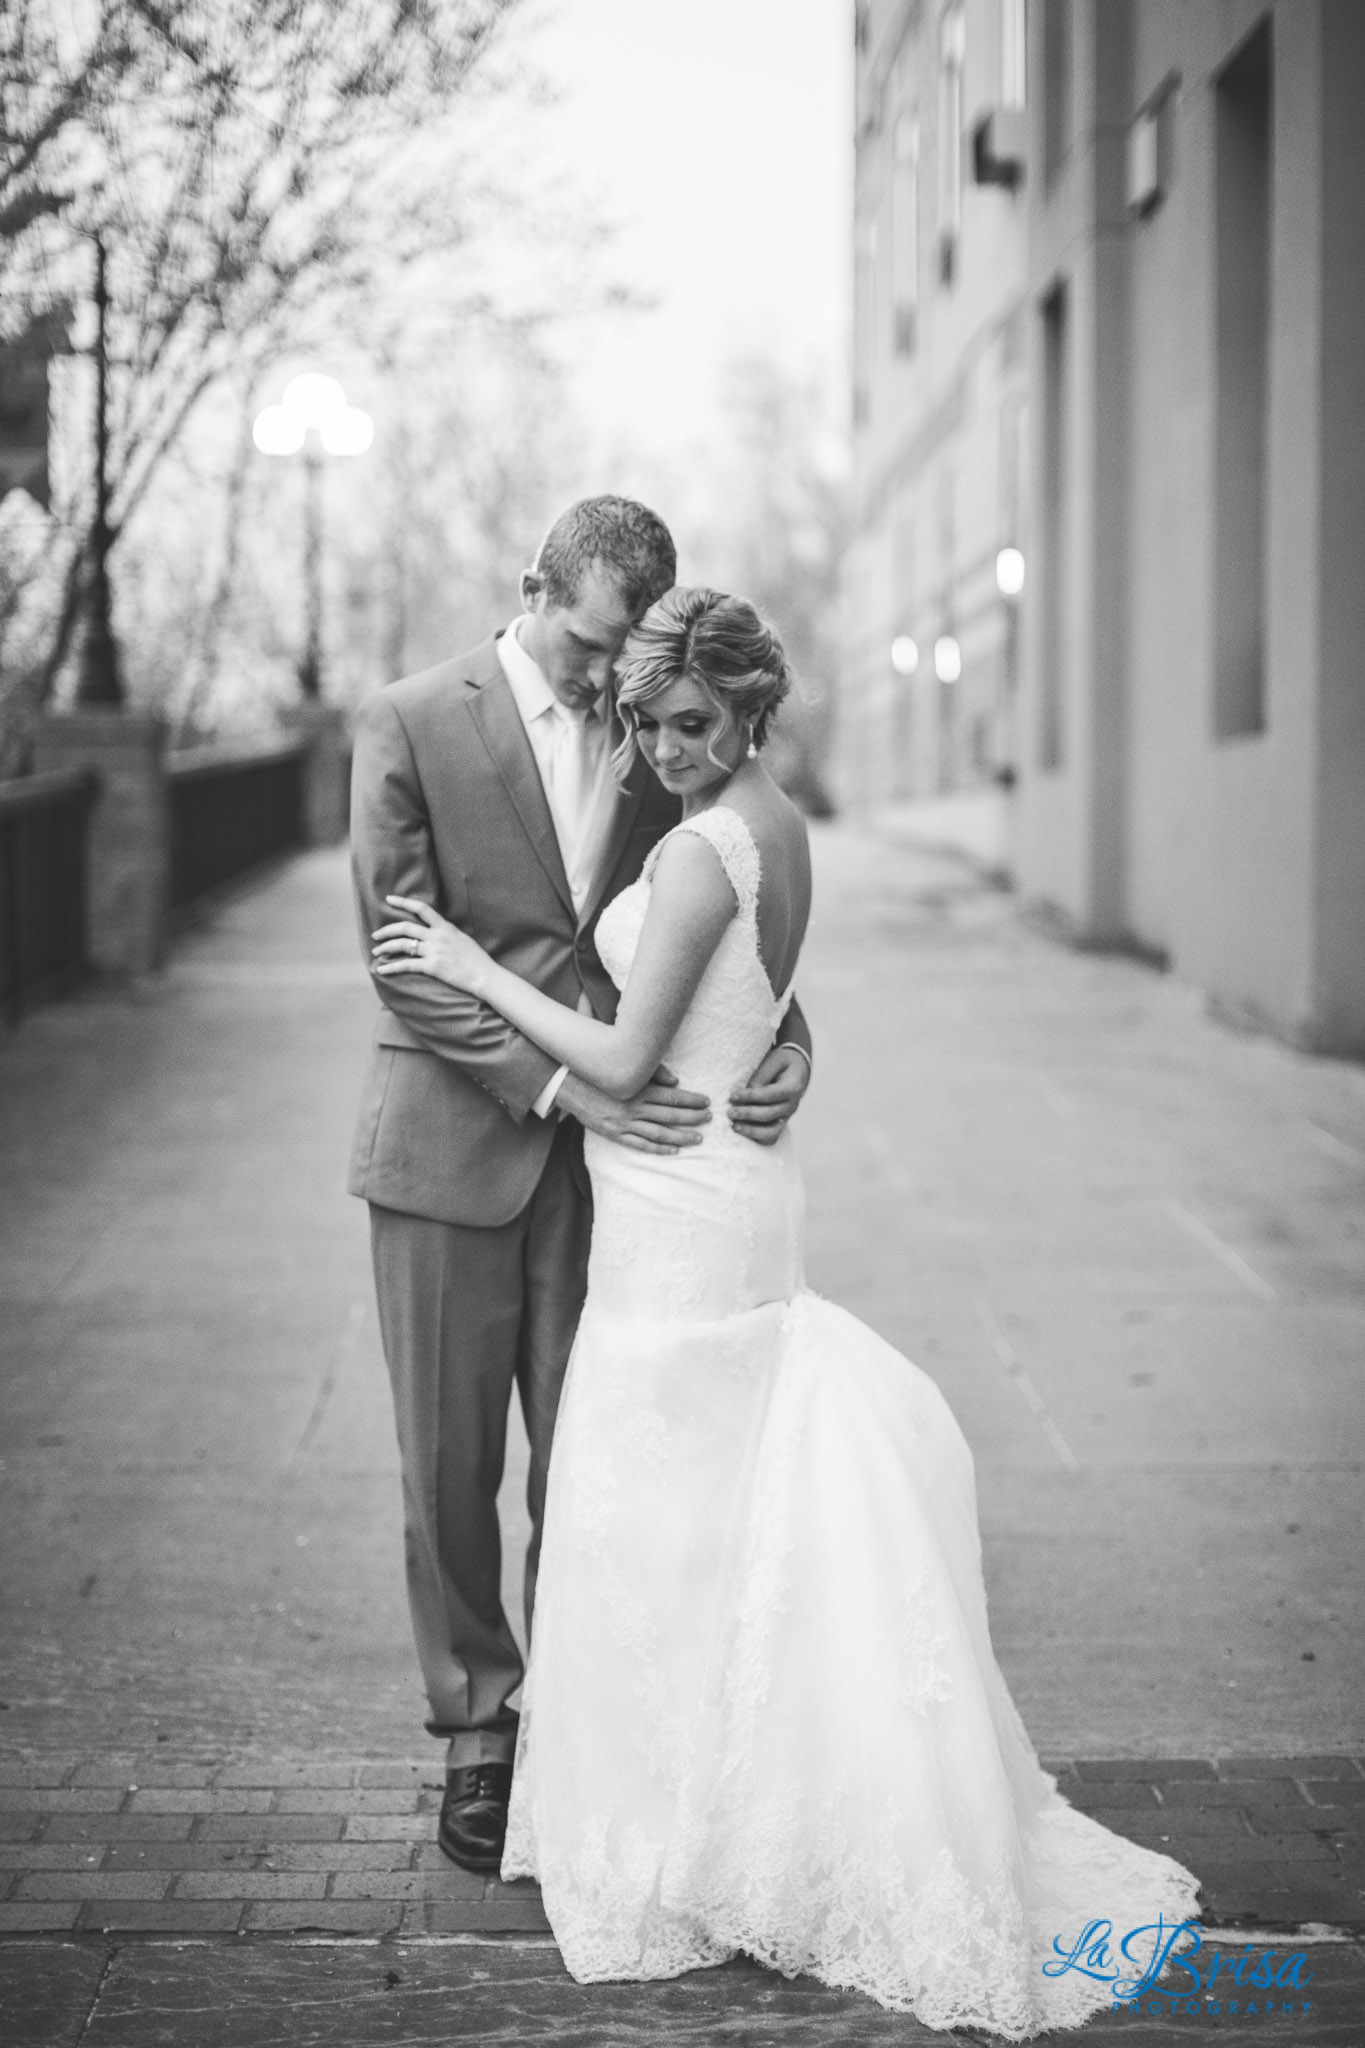 Caitlin & Mitch | Wedding | Lawrence, KS | Sarah & Autumn